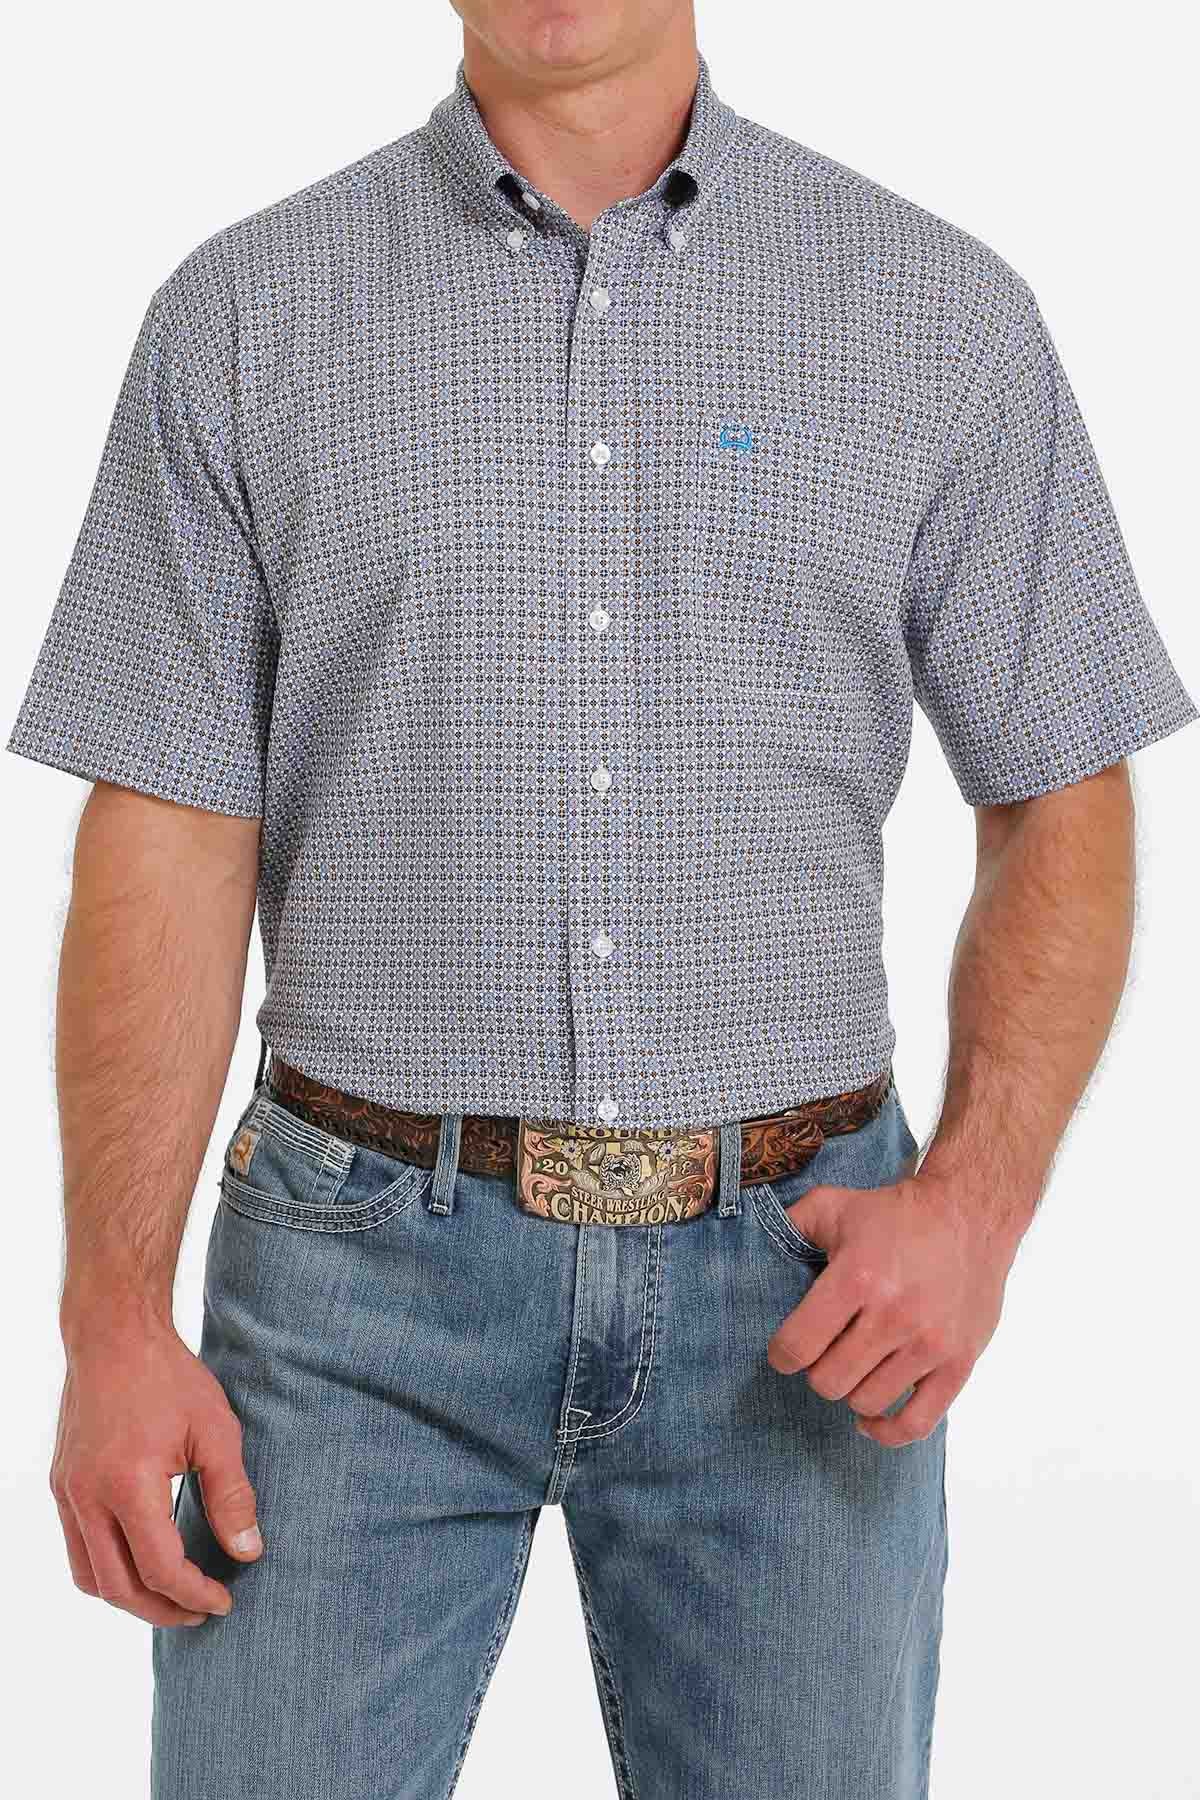 Men's Cinch Arenaflex White & Blue Geometric Print SSL BD Shirt